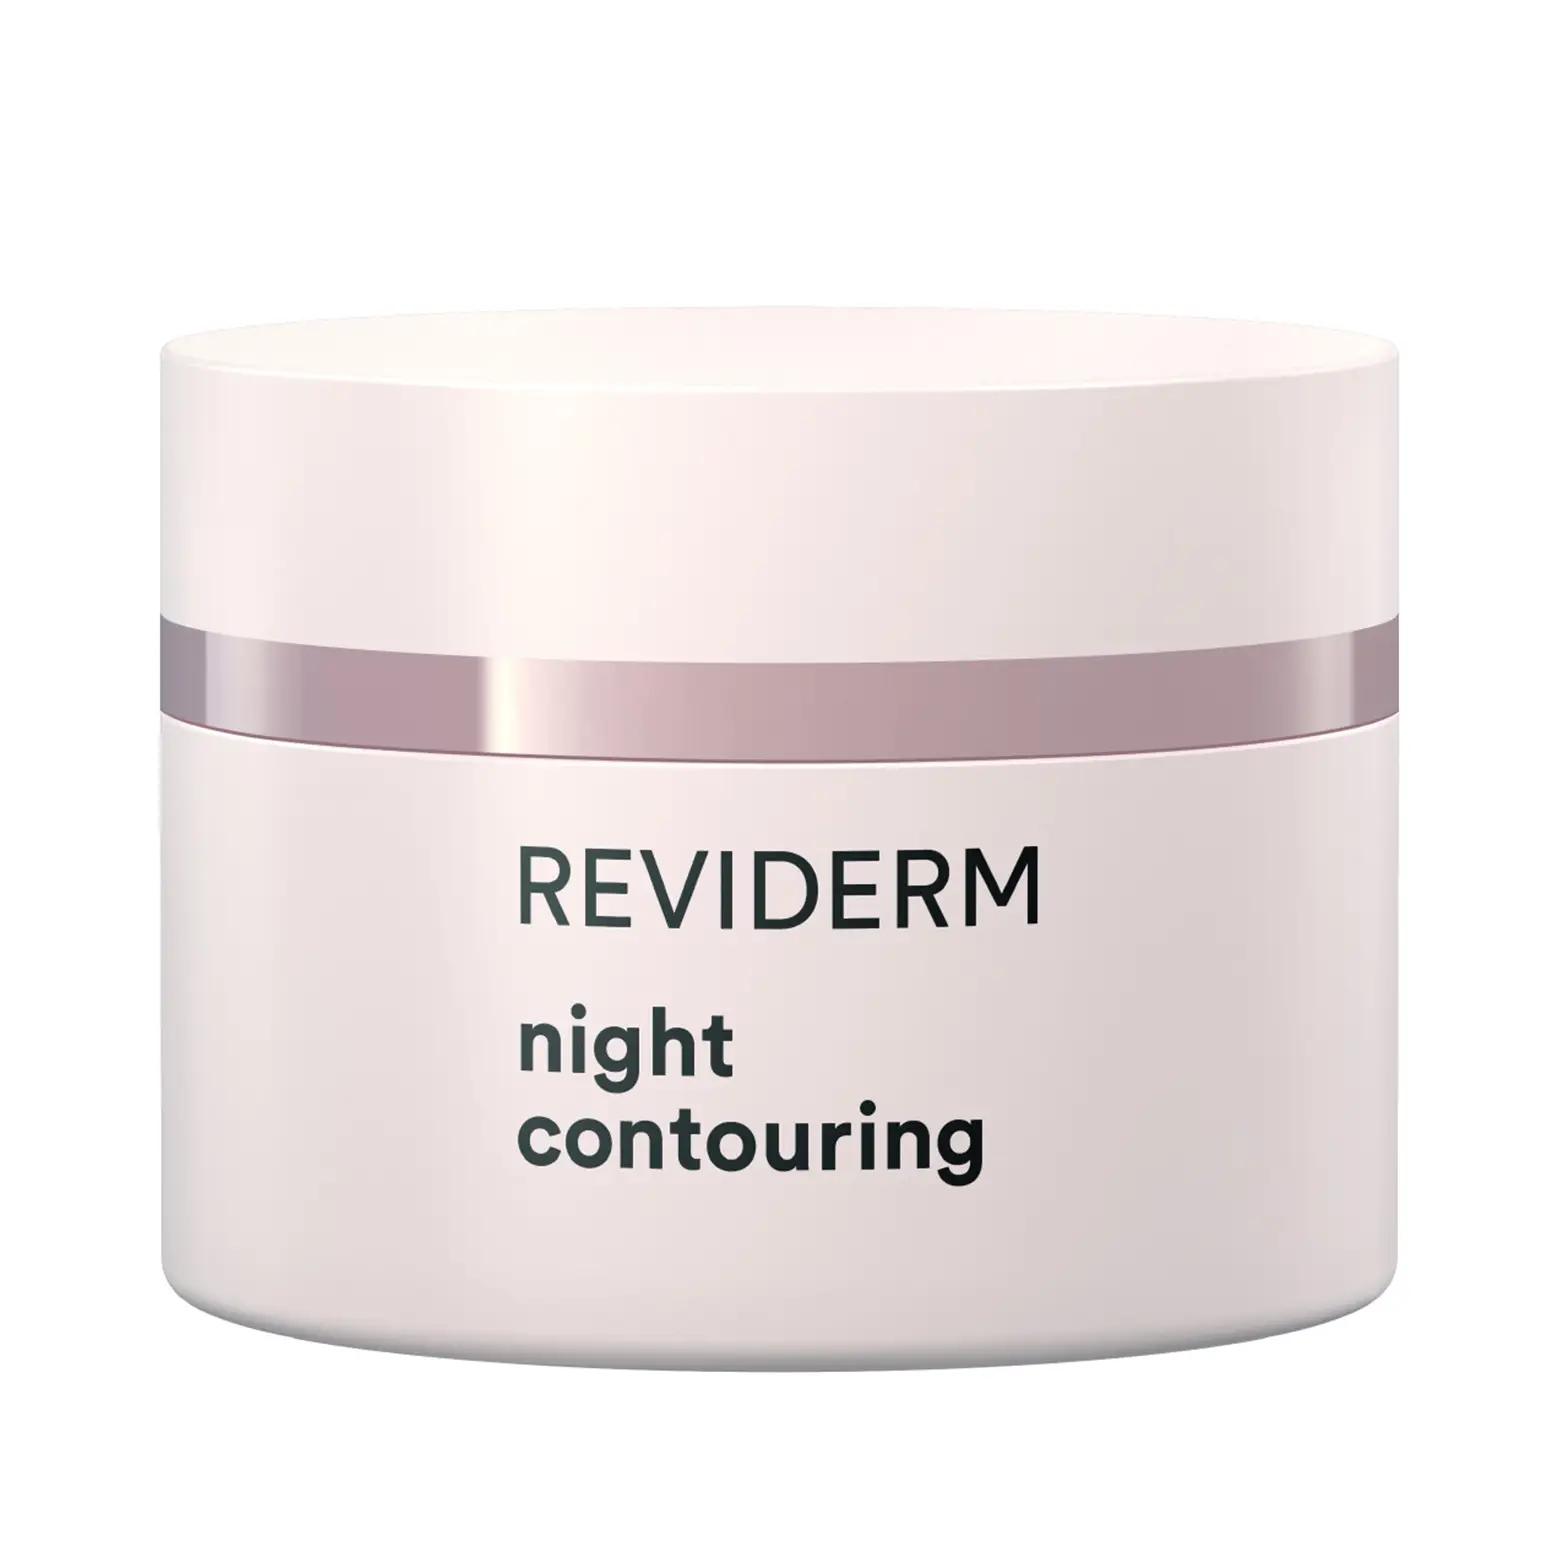 Reviderm Night Contouring huidcreme